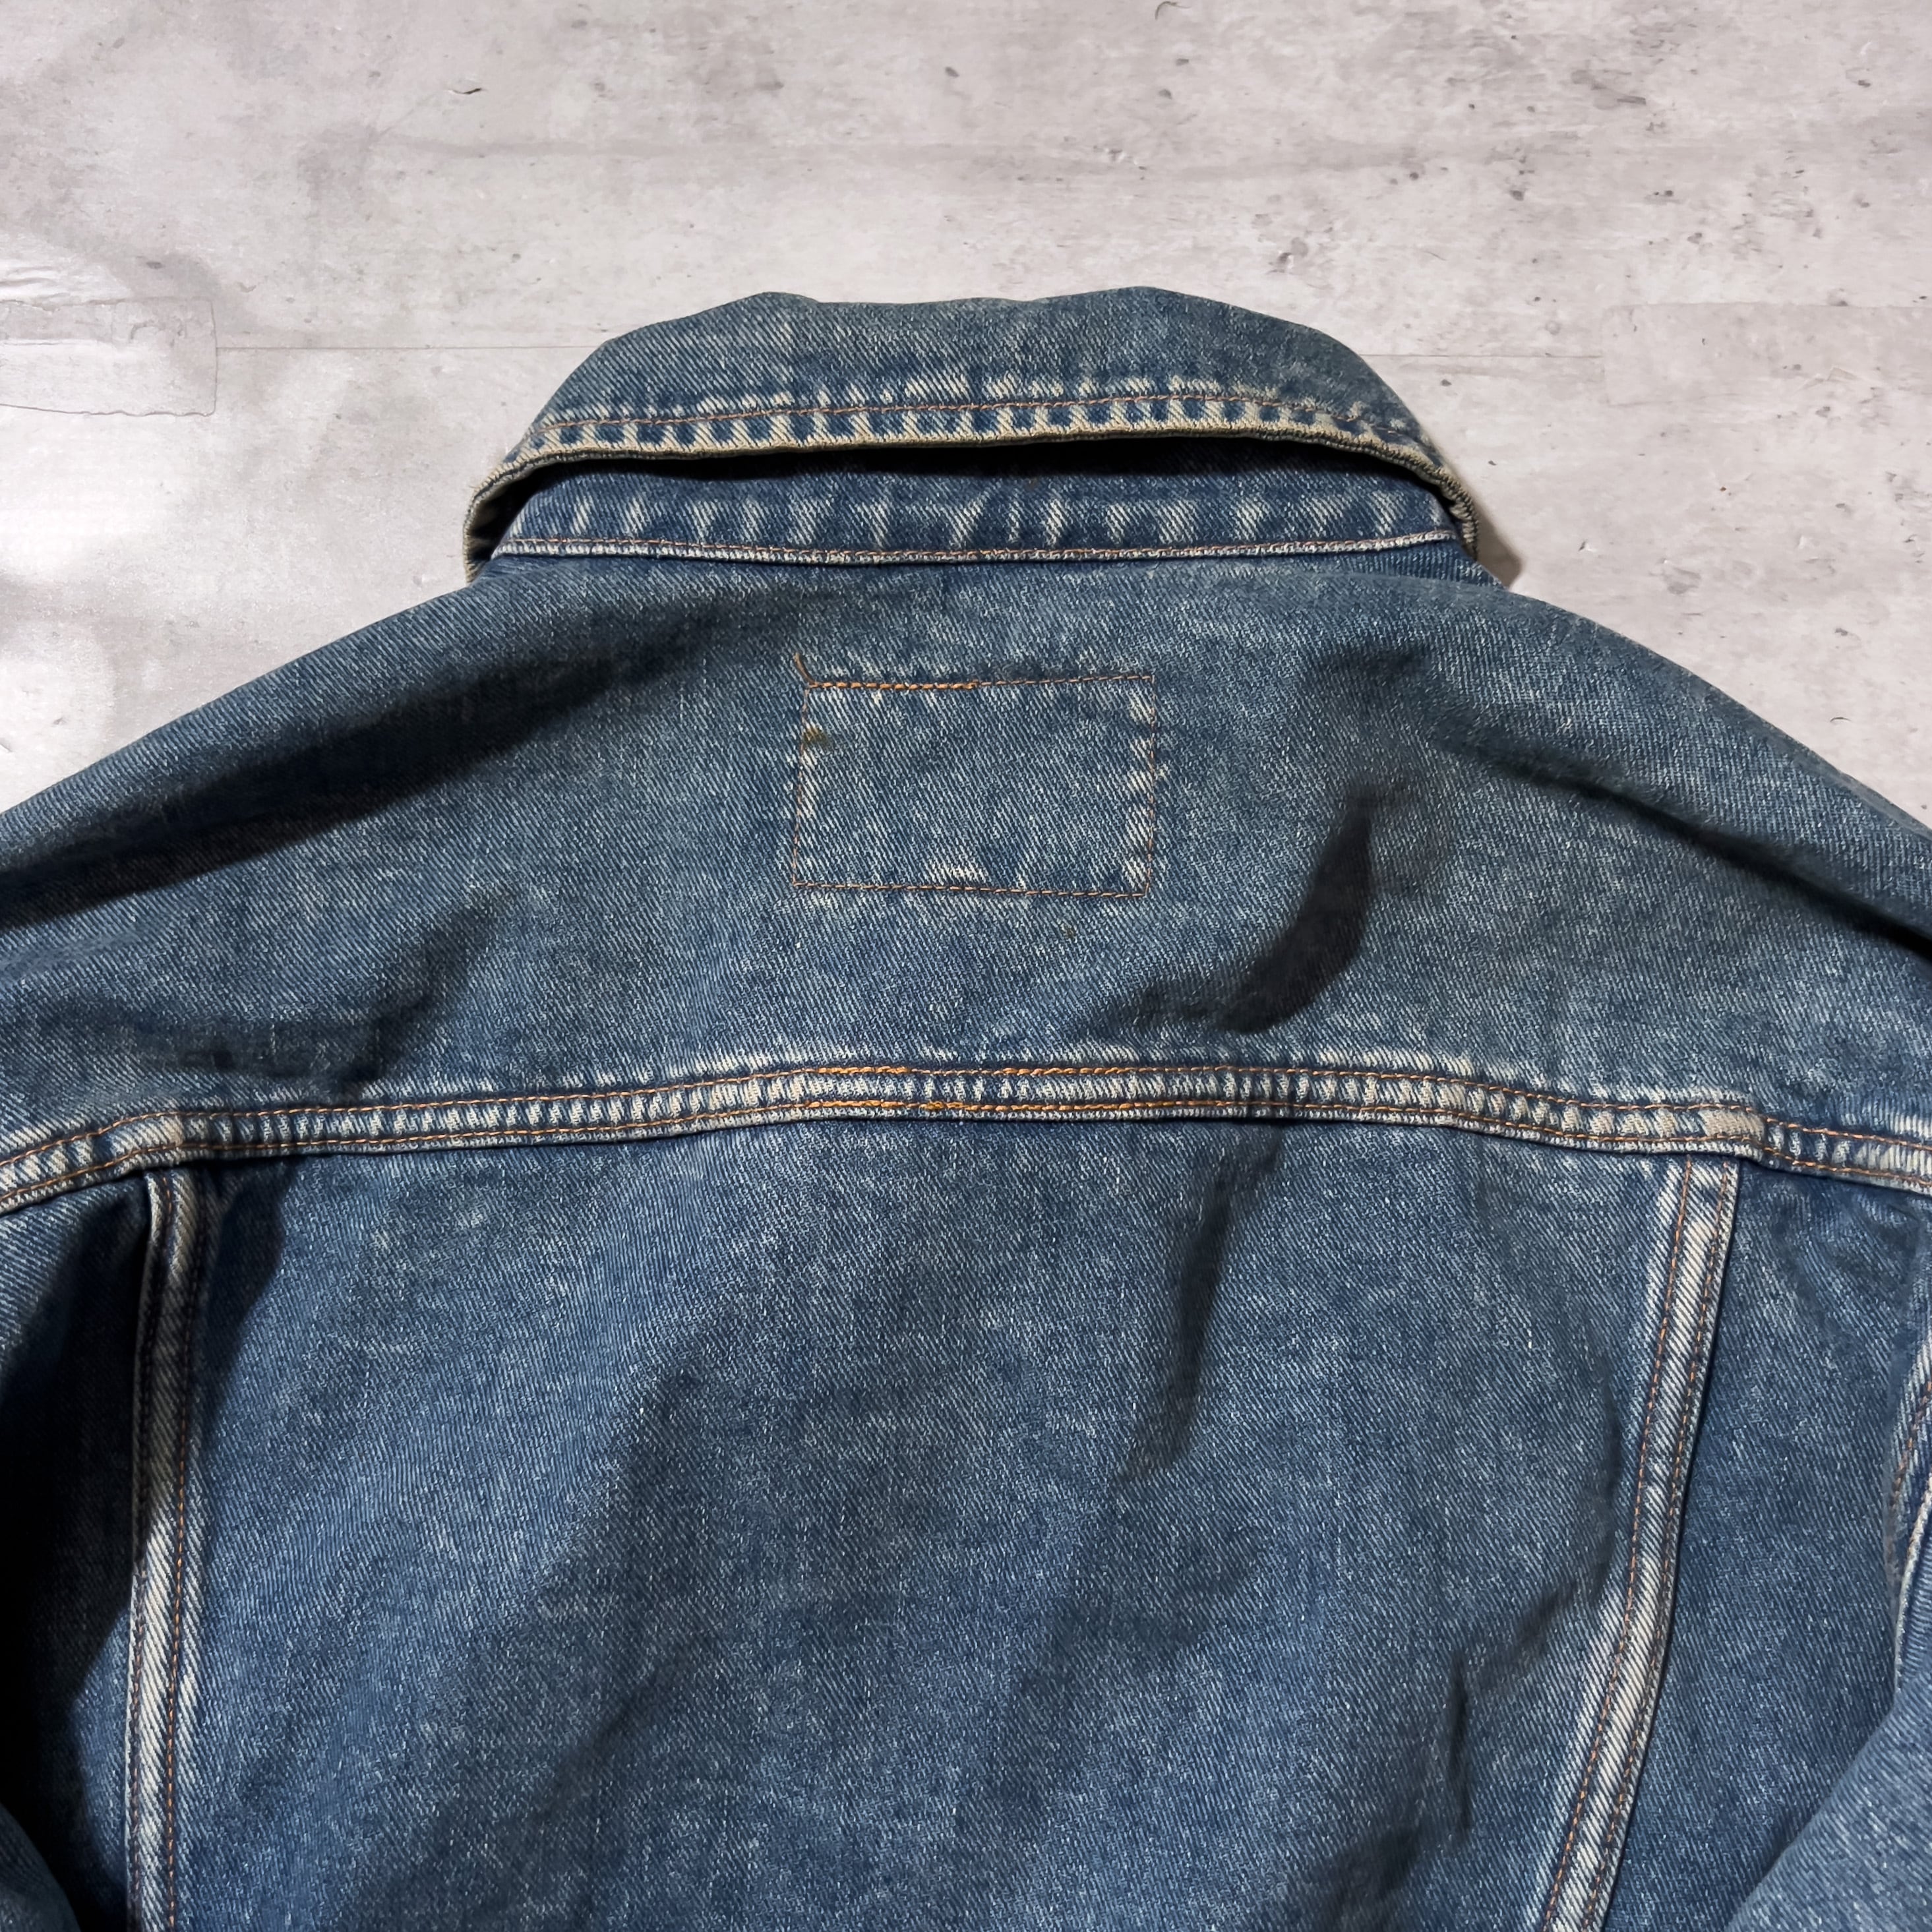 90s “ARMANI jeans” denim jacket made in Hong Kong 90年代 